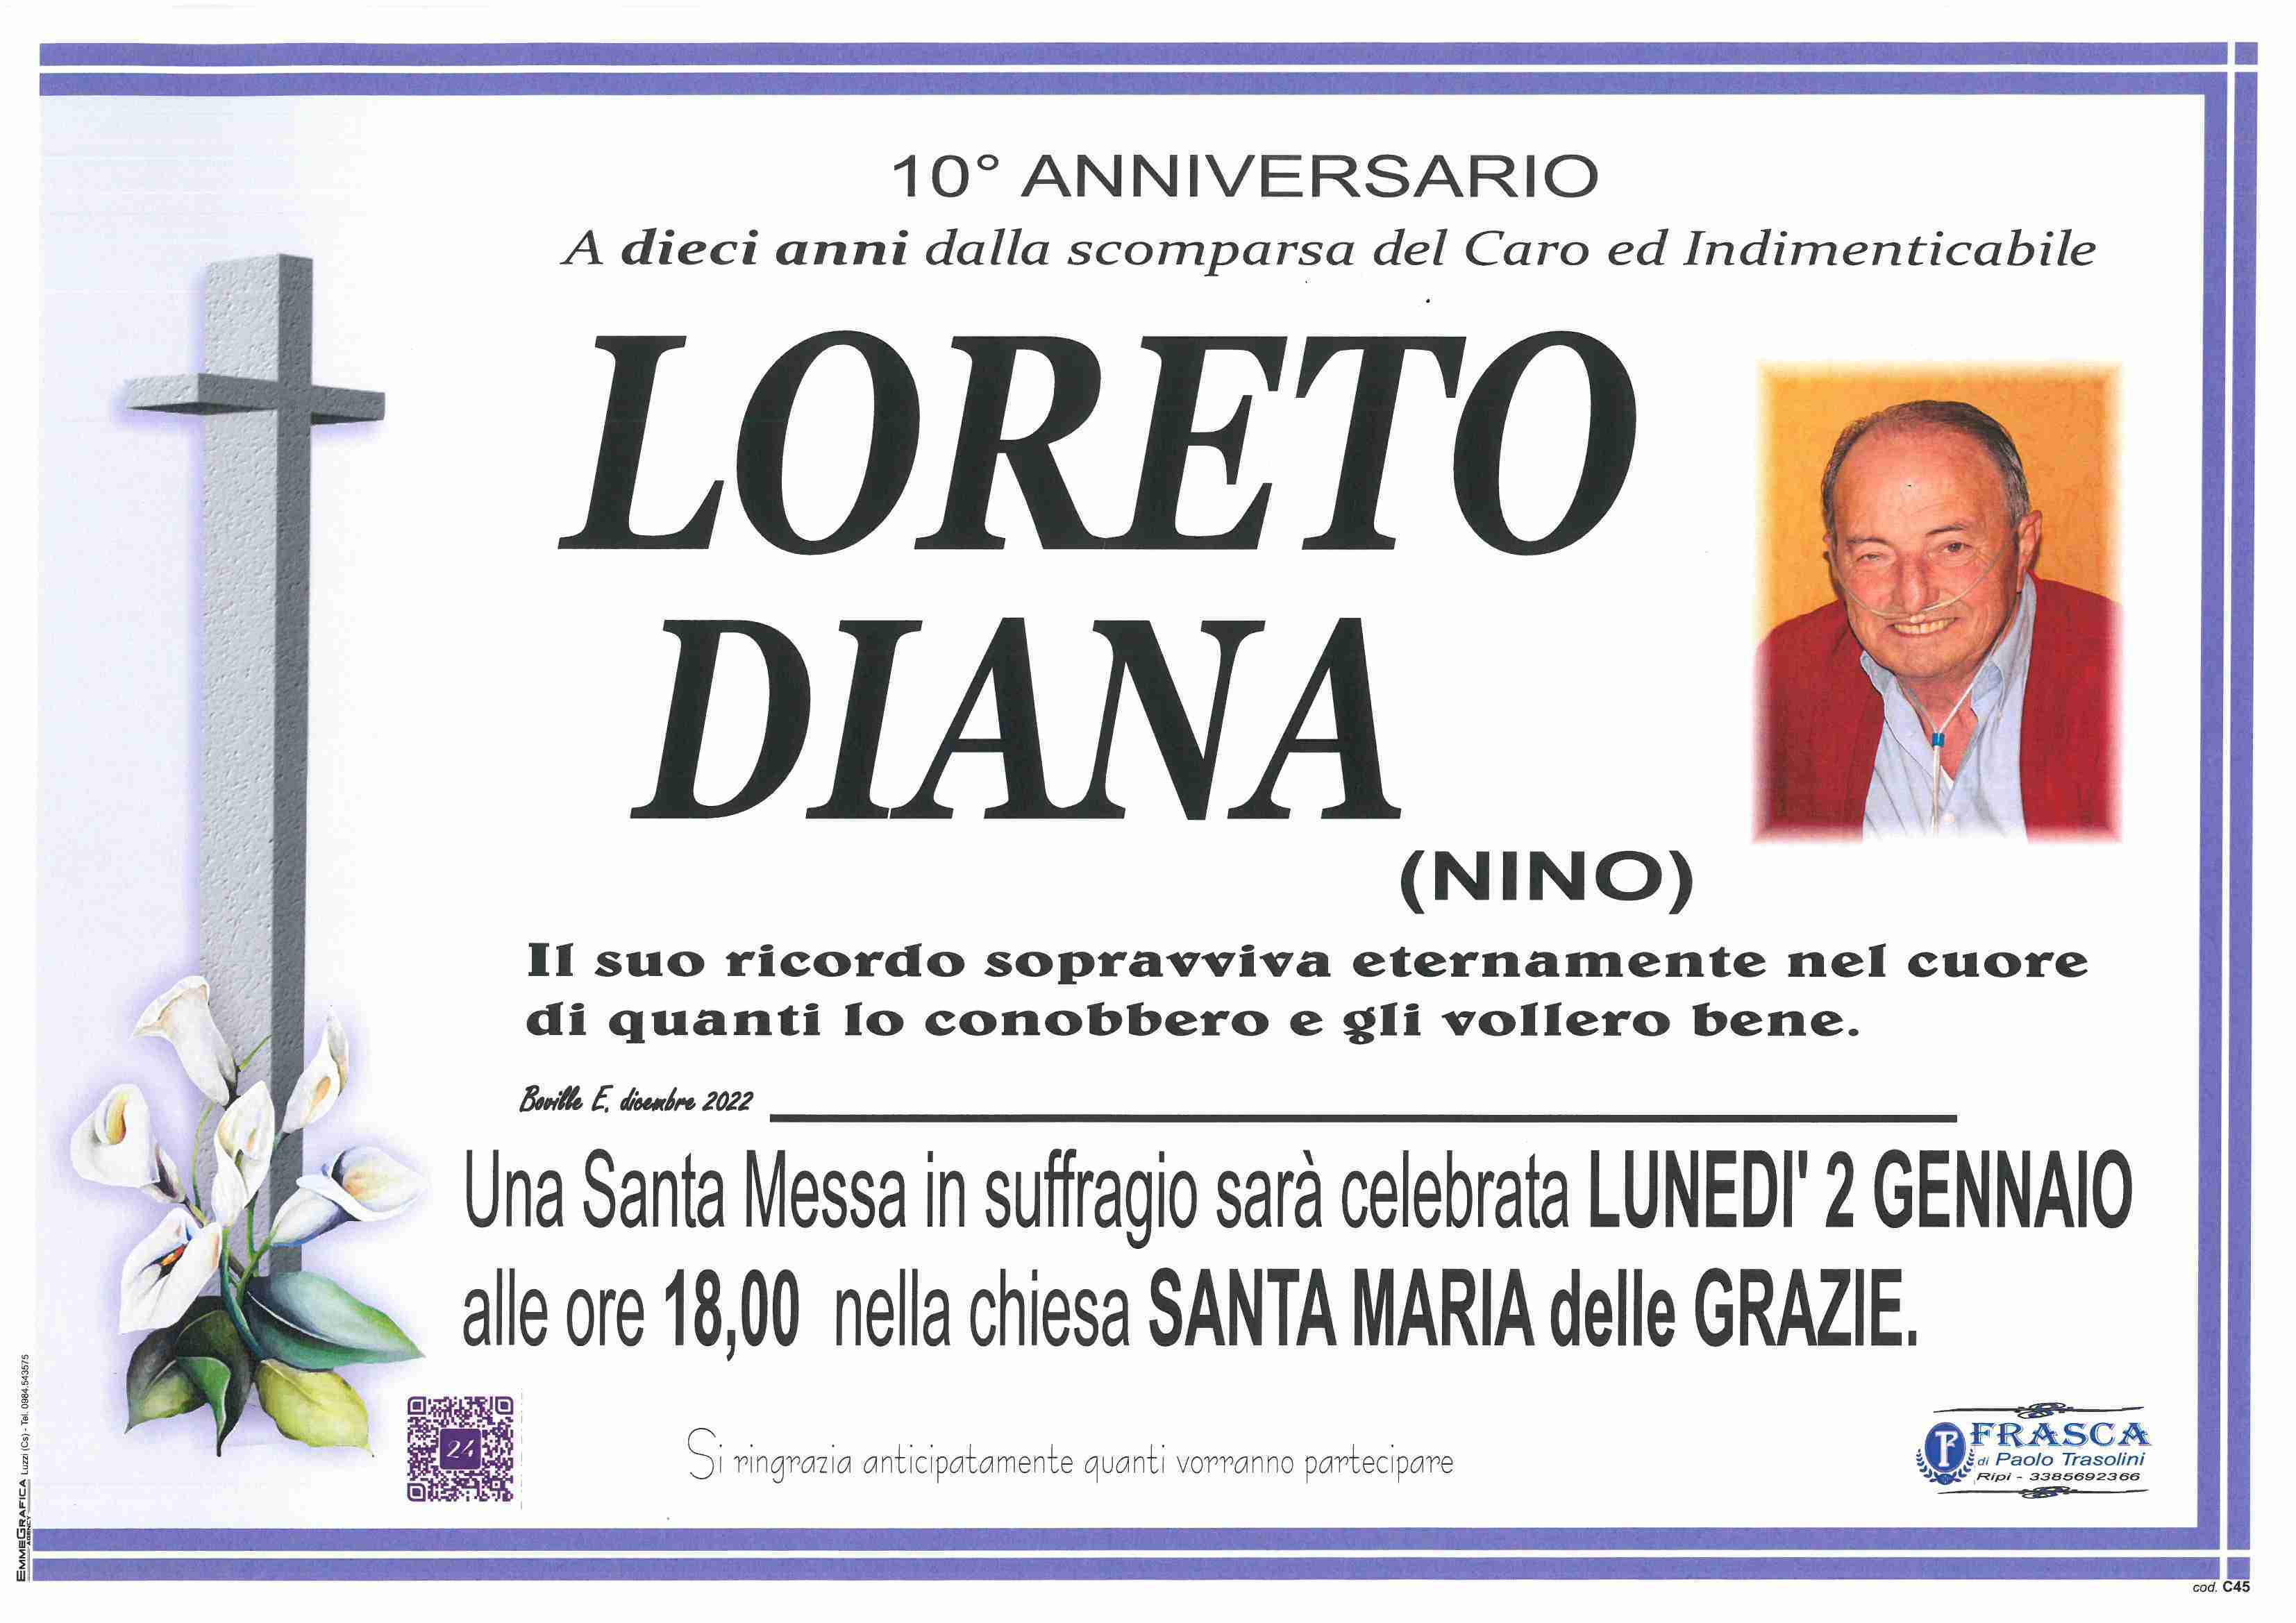 Loreto Diana